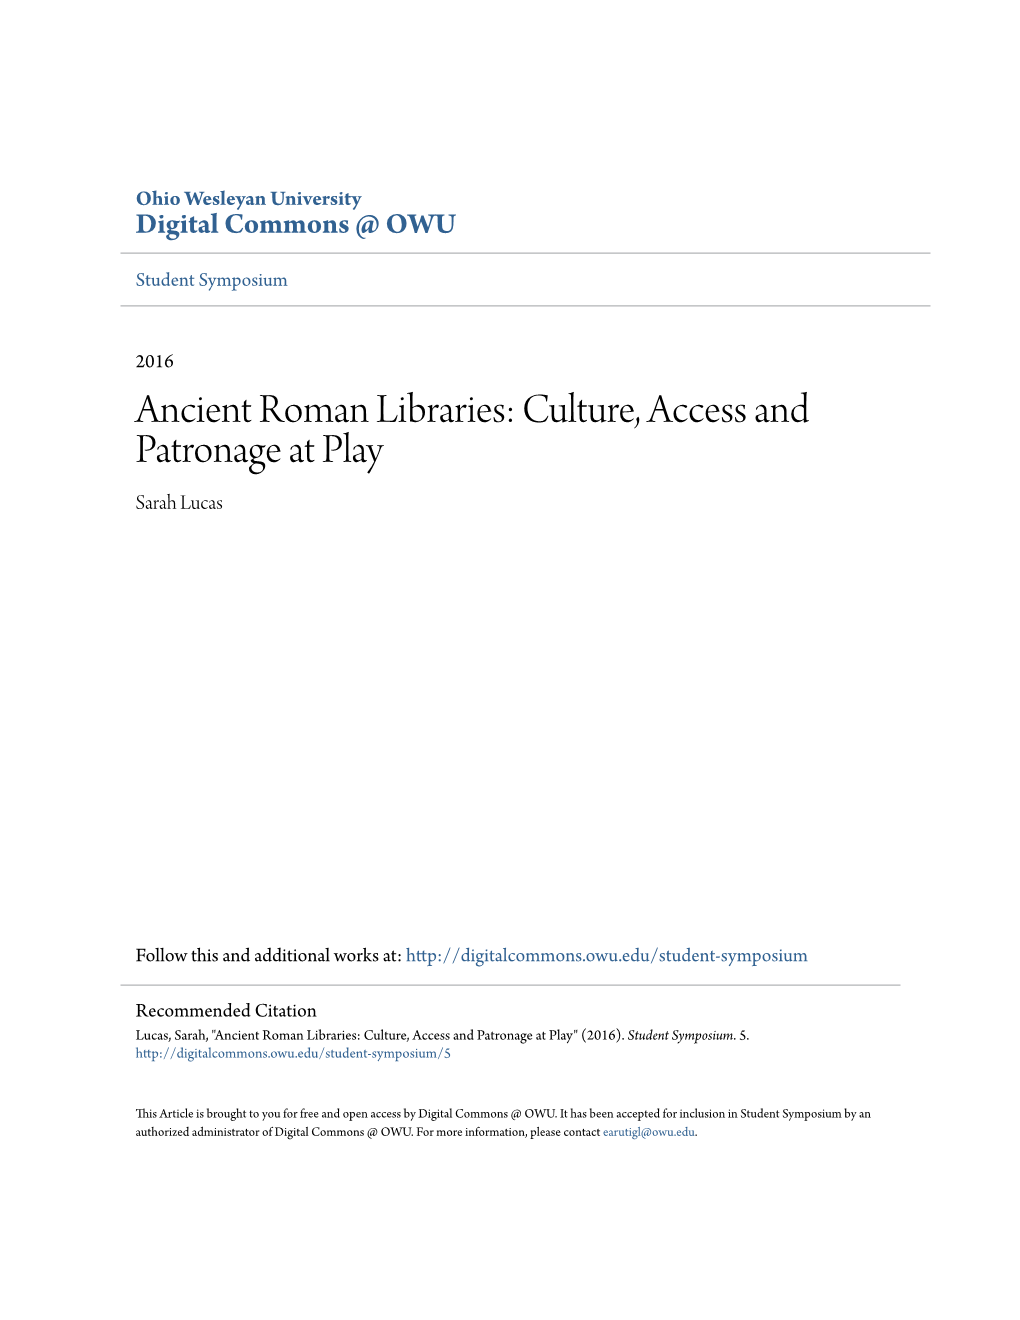 Ancient Roman Libraries: Culture, Access and Patronage at Play Sarah Lucas